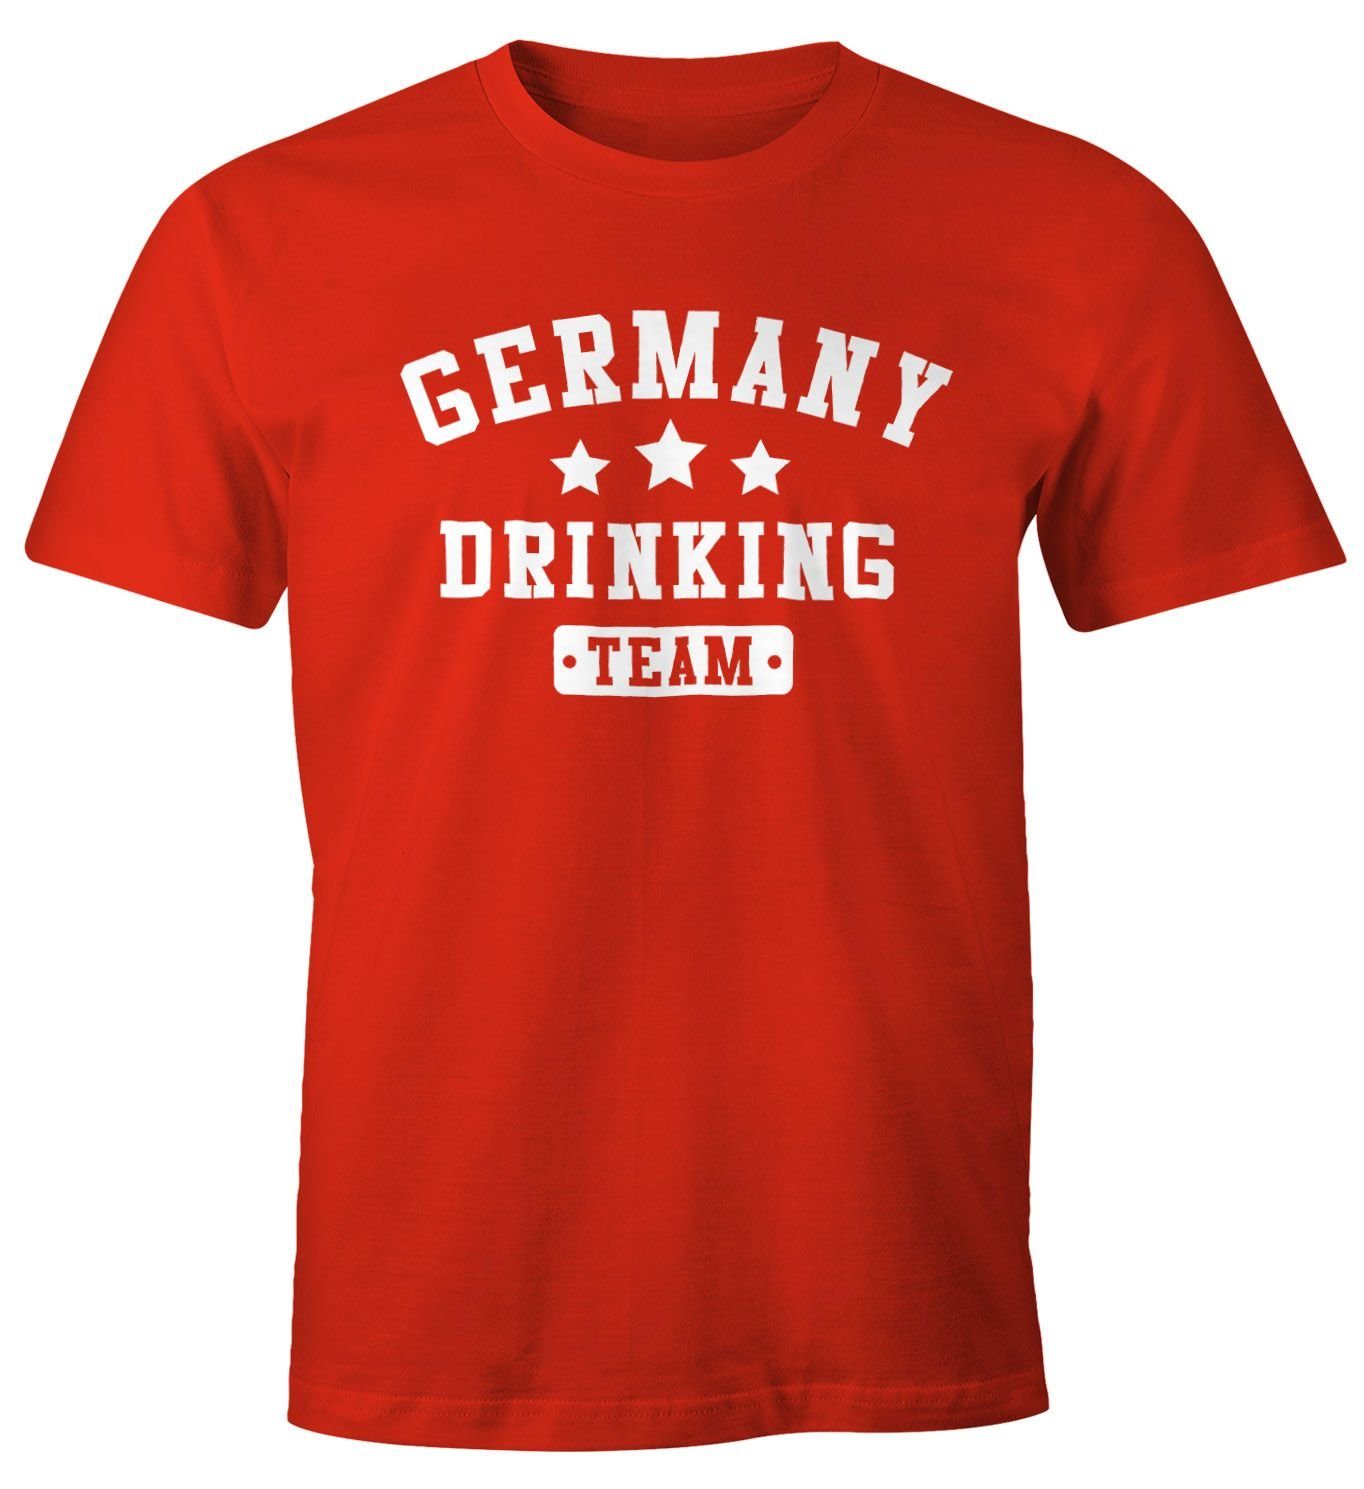 MoonWorks Print-Shirt Herren T-Shirt Germany Drinking Team Bier Fun-Shirt Moonworks® mit Print rot